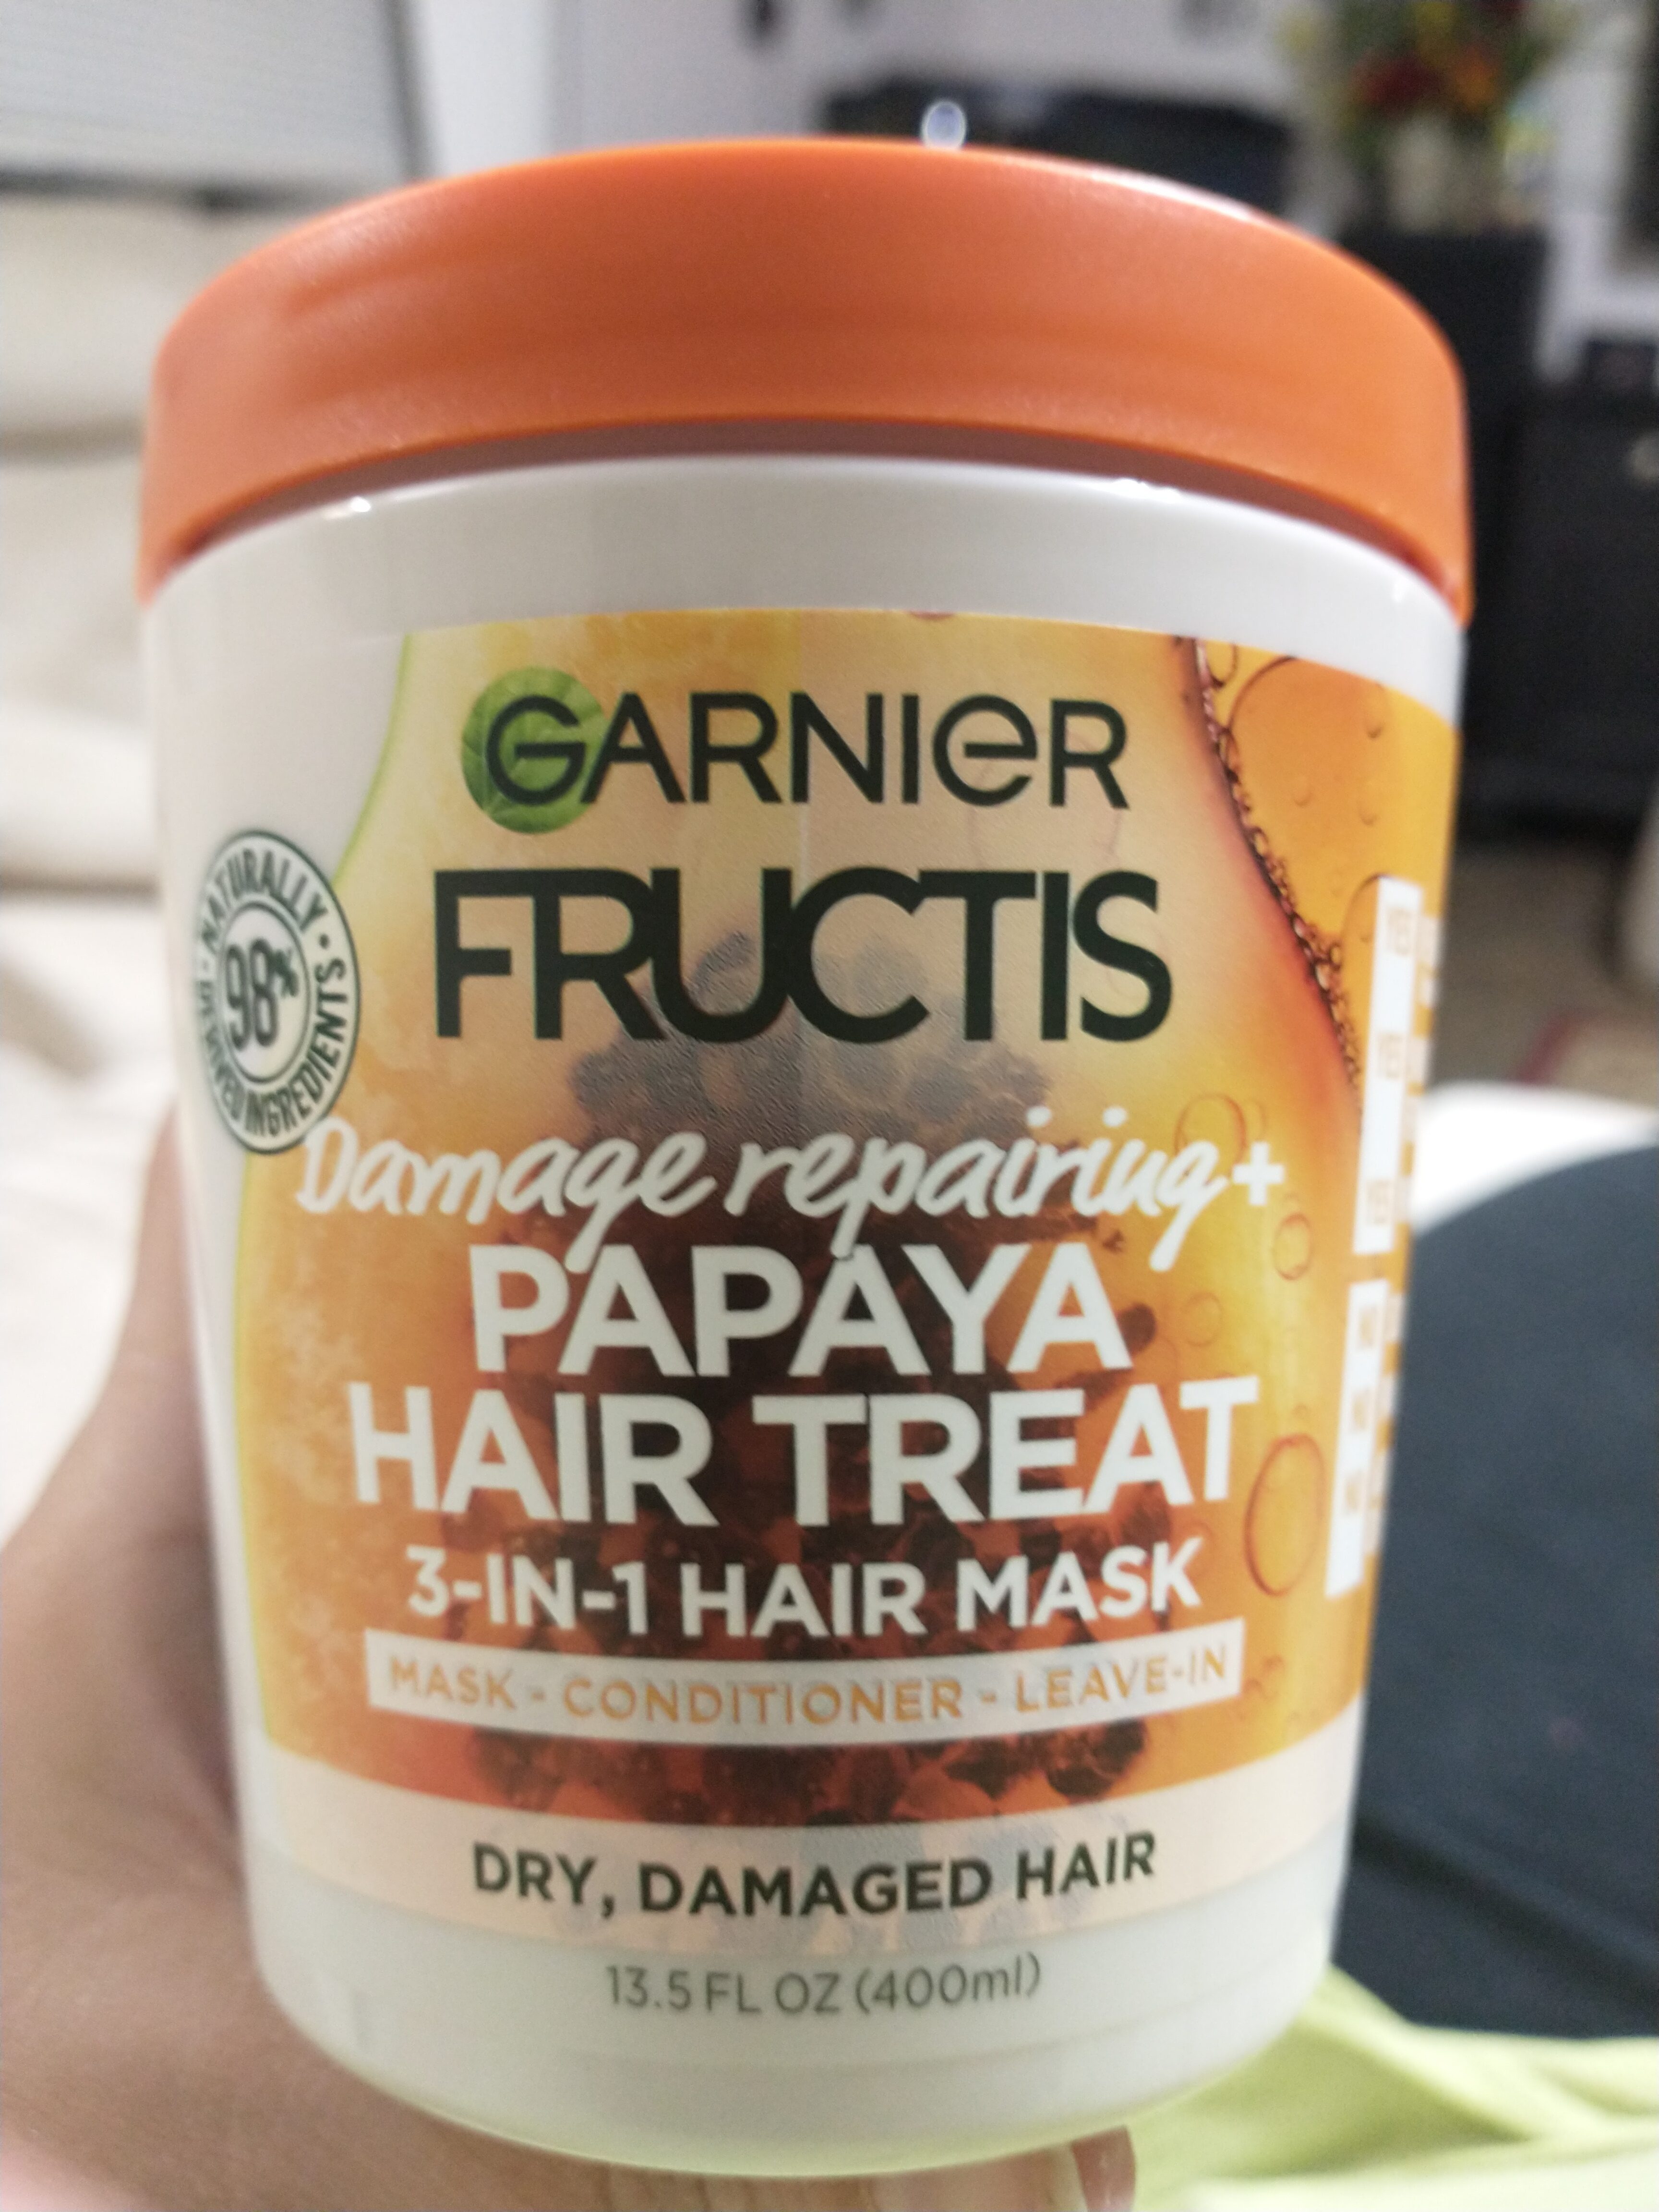 damage reparing + papaya hair treat 3-in-1 hair mask - Garnier Fructis -   FL oz (400ml)